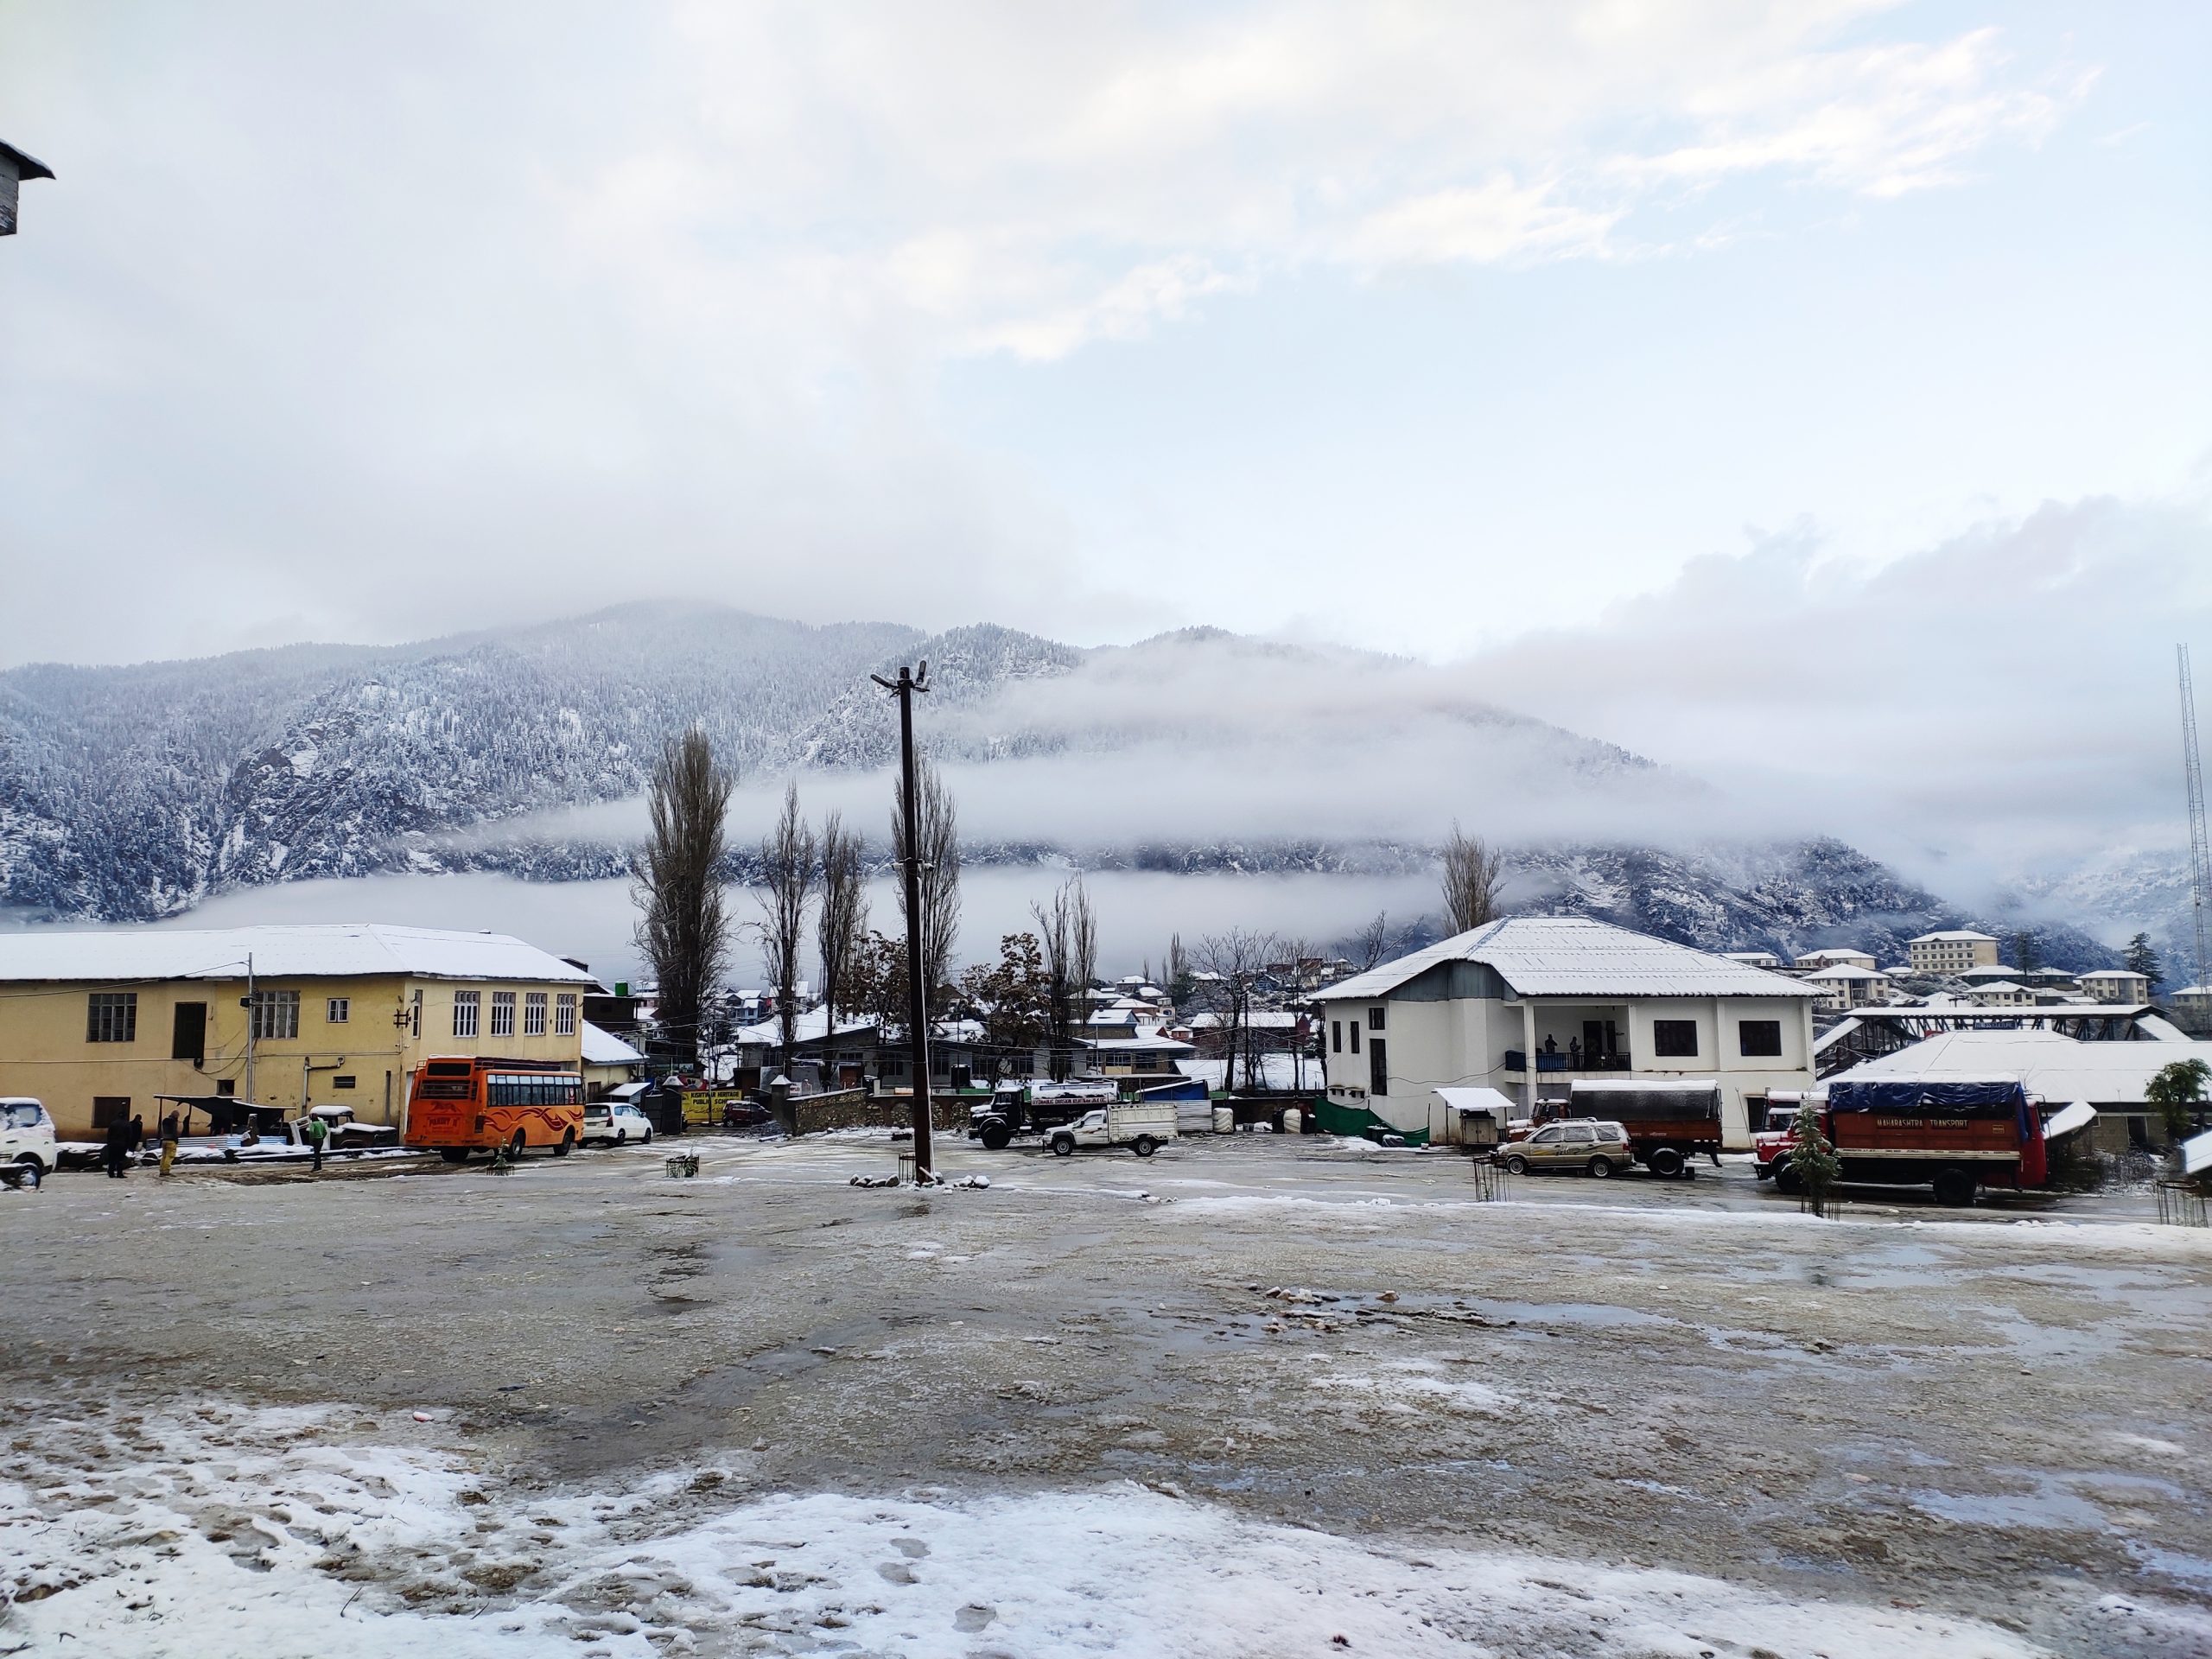 Winter of a mountainous village